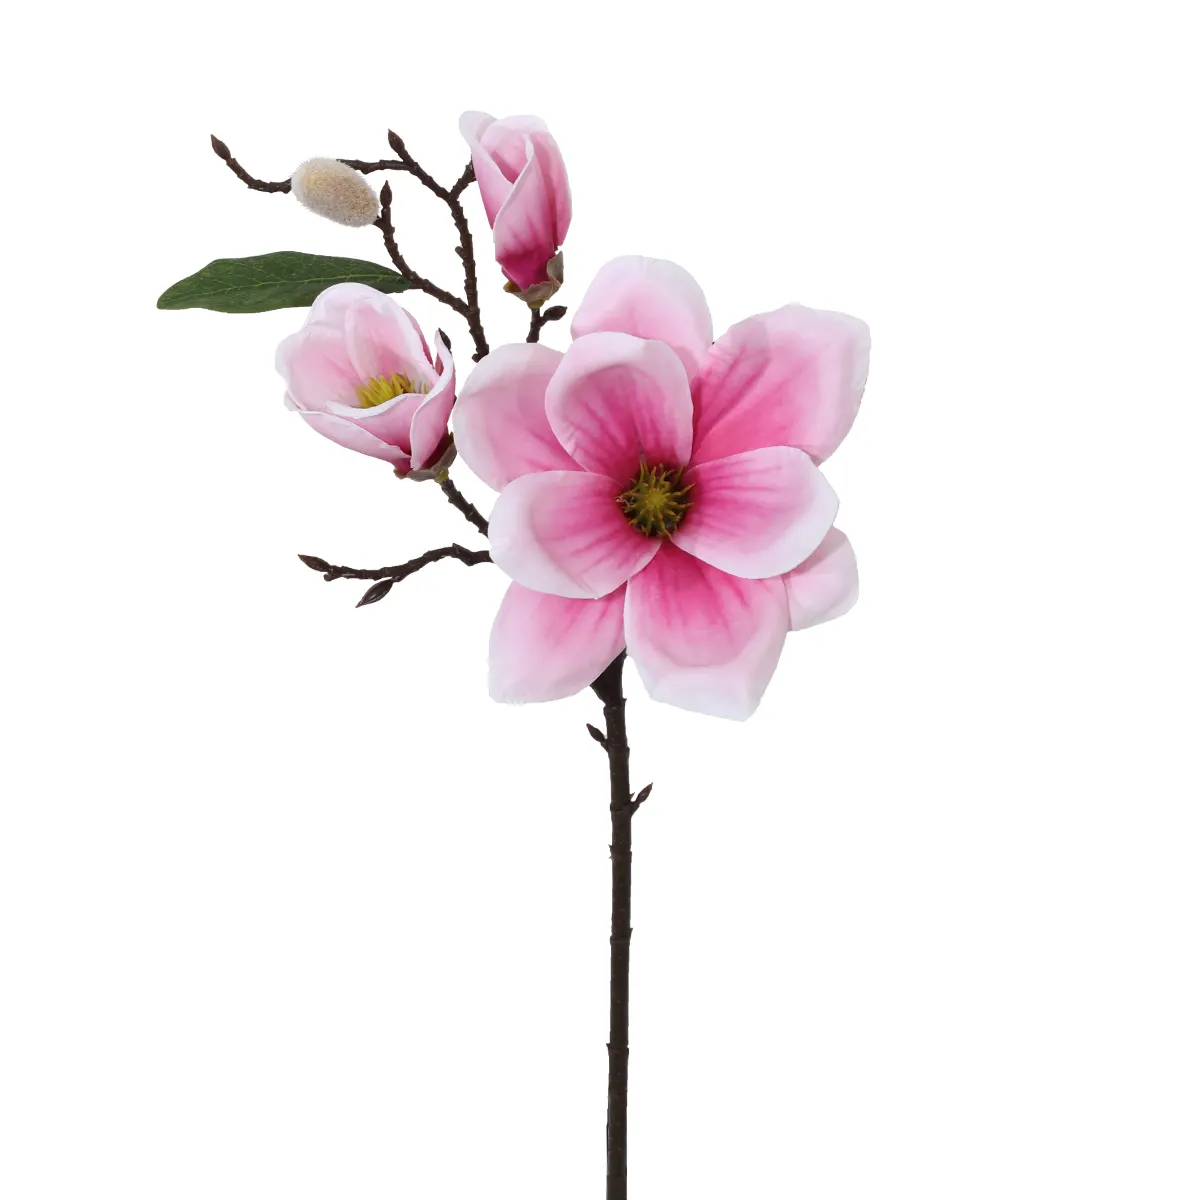 FXYH-0078 terbaik sentuhan asli buket Magnolia buatan pengaturan vas bunga atas meja untuk dekorasi rumah